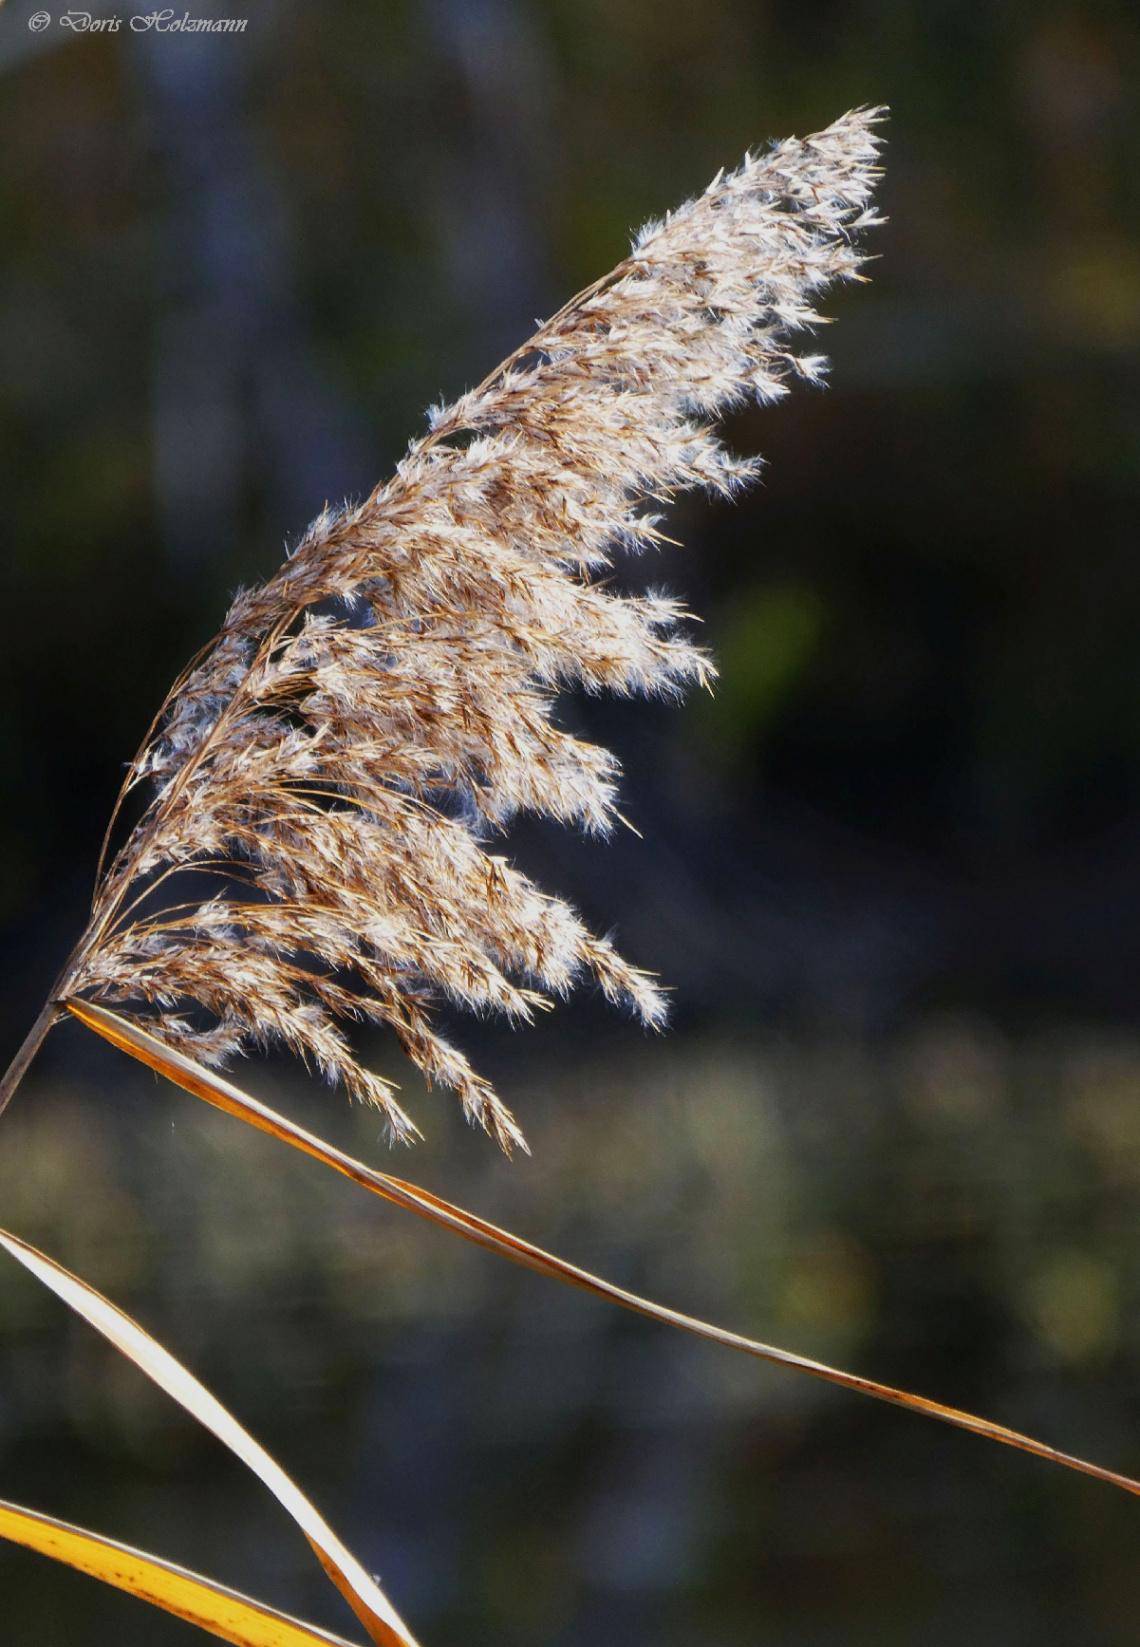 Phragmites australis, the common reed